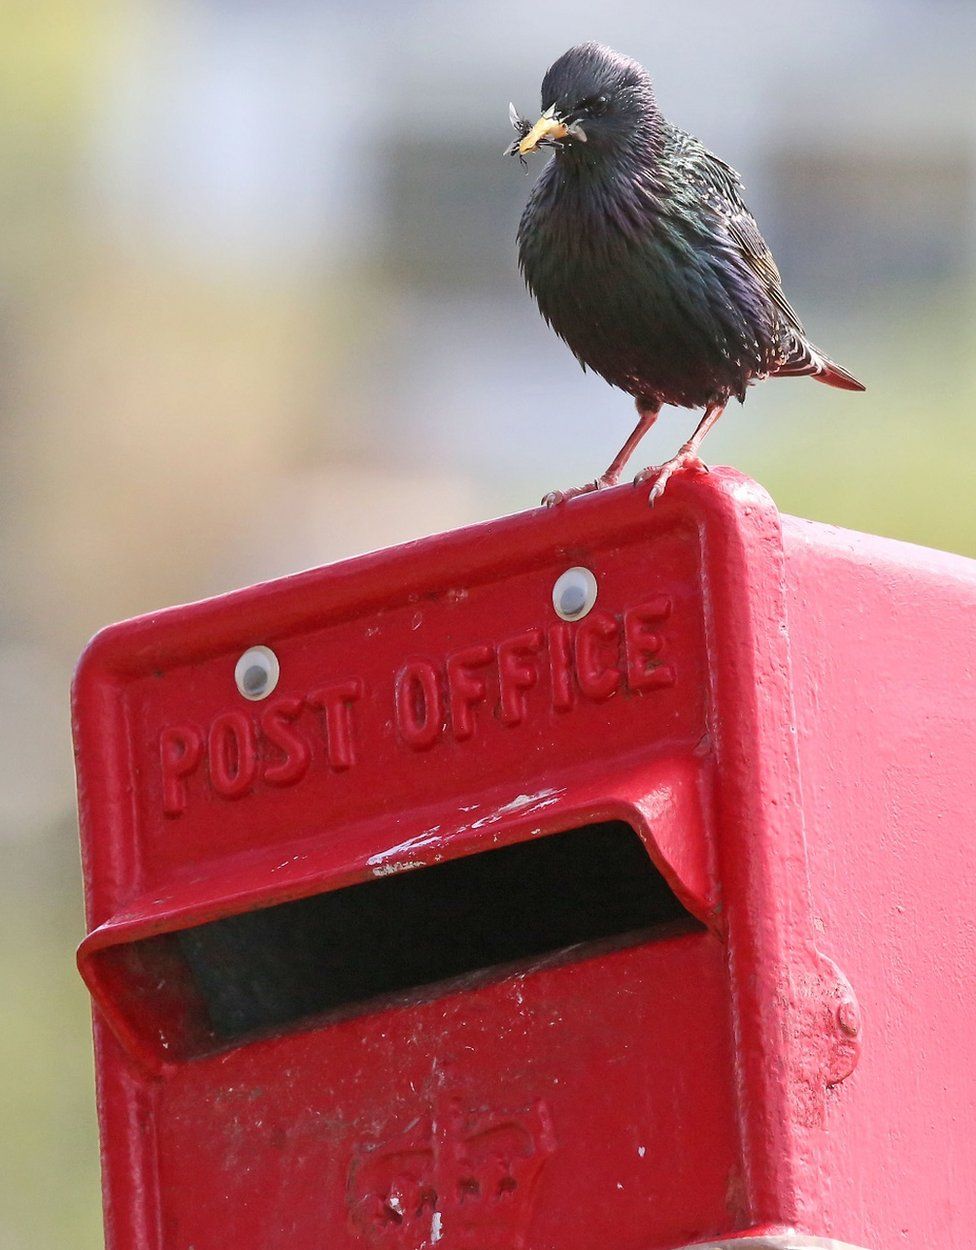 Post box nest